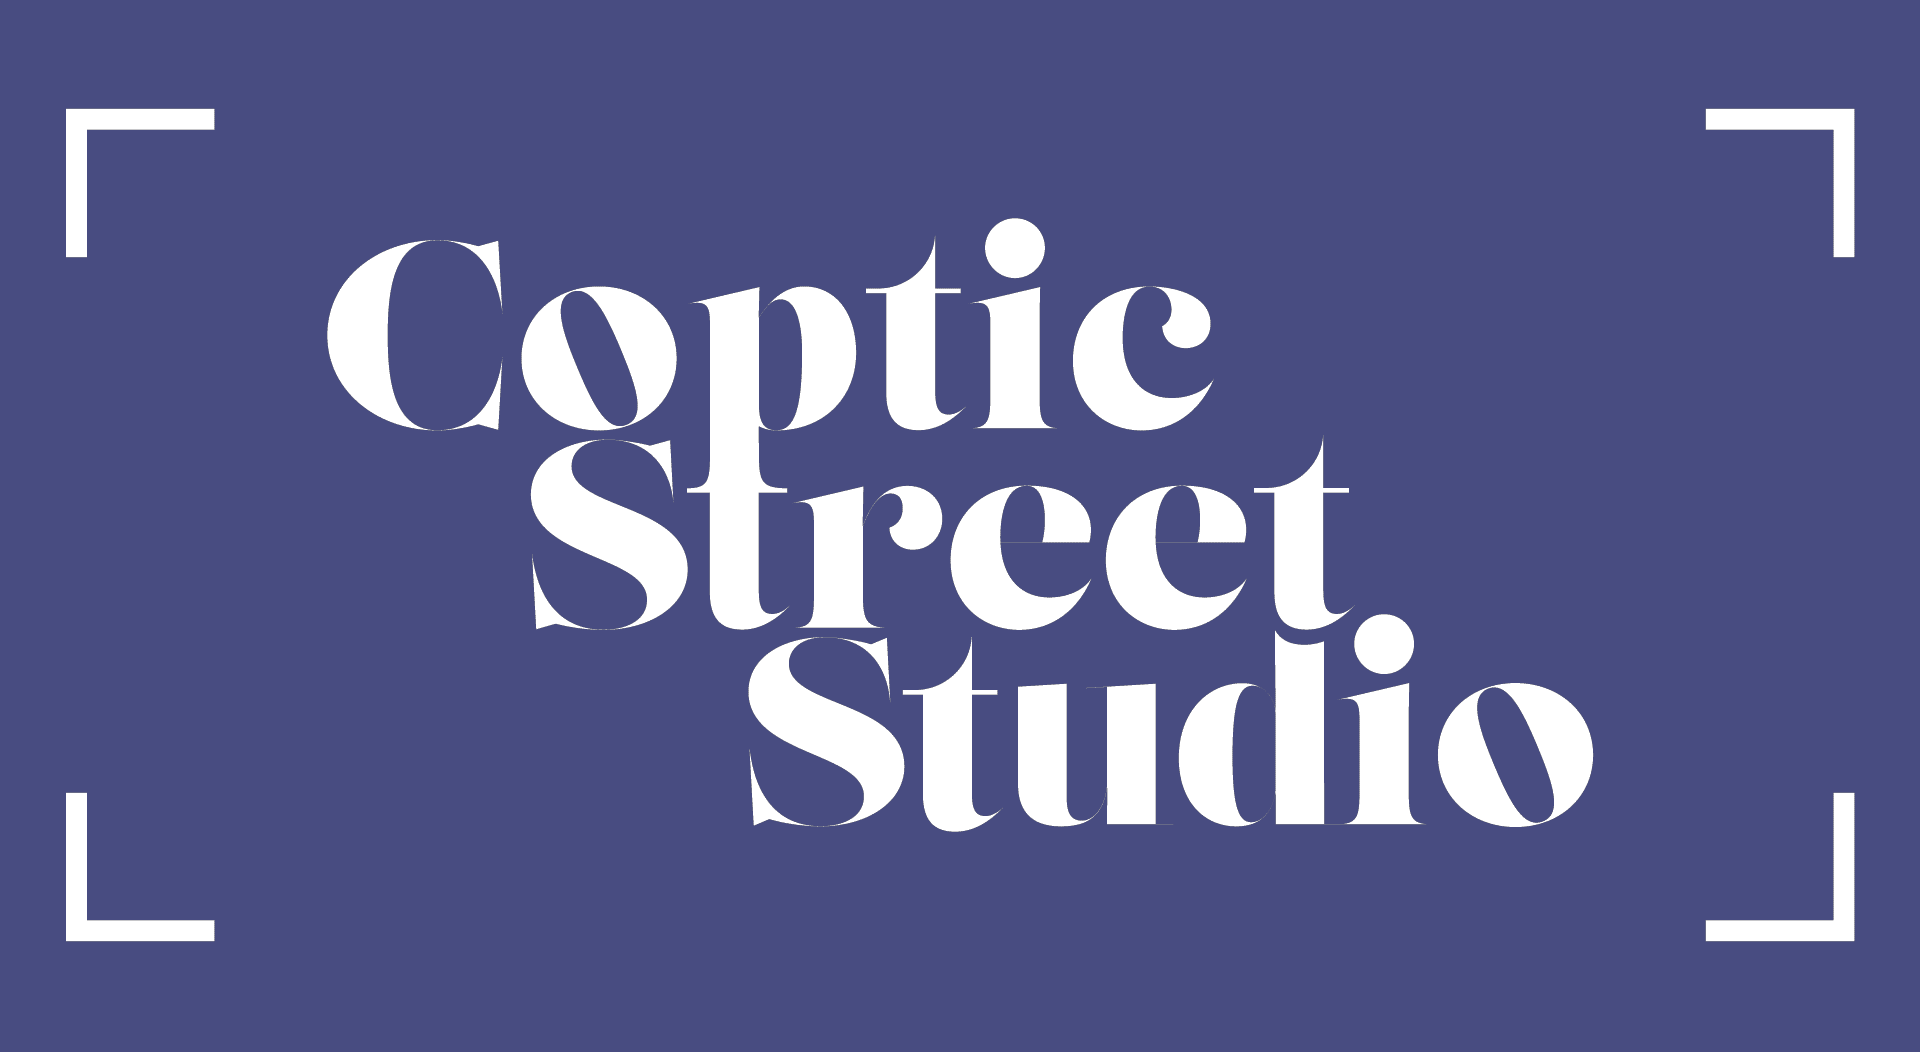 Coptic Street Studio Gradient Background